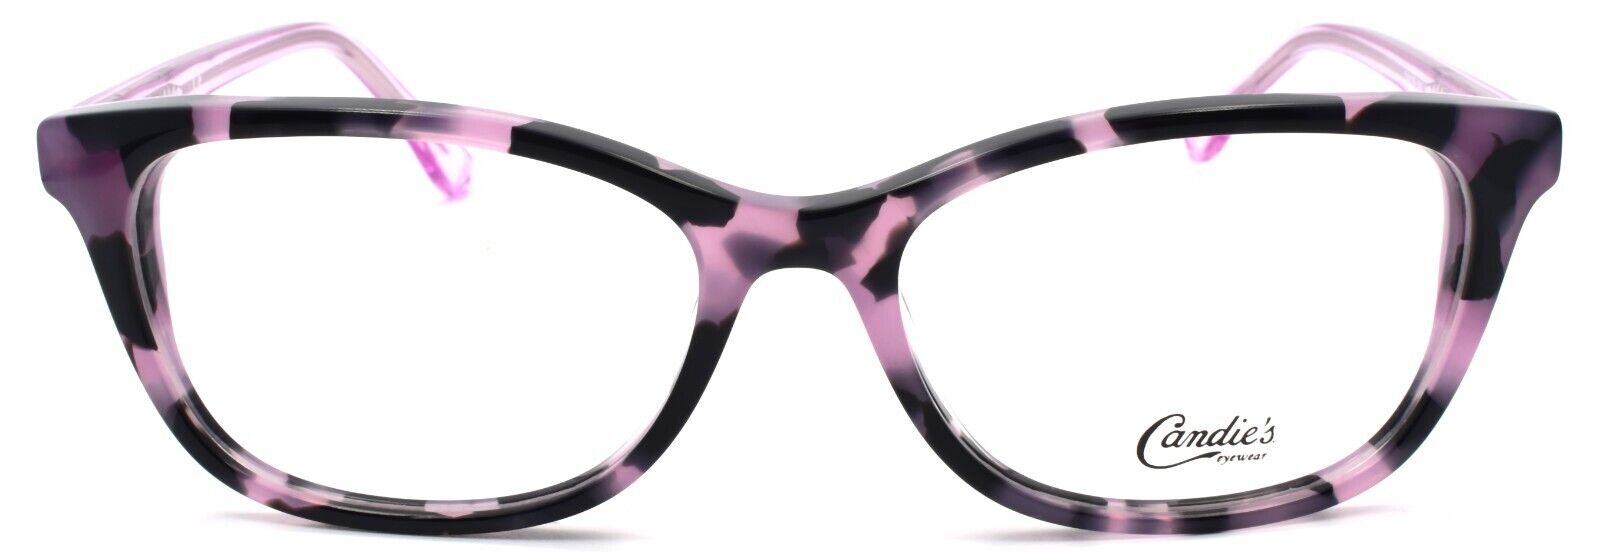 2-Candies CA0176 083 Women's Eyeglasses Frames Cat Eye 53-16-140 Violet-889214072467-IKSpecs